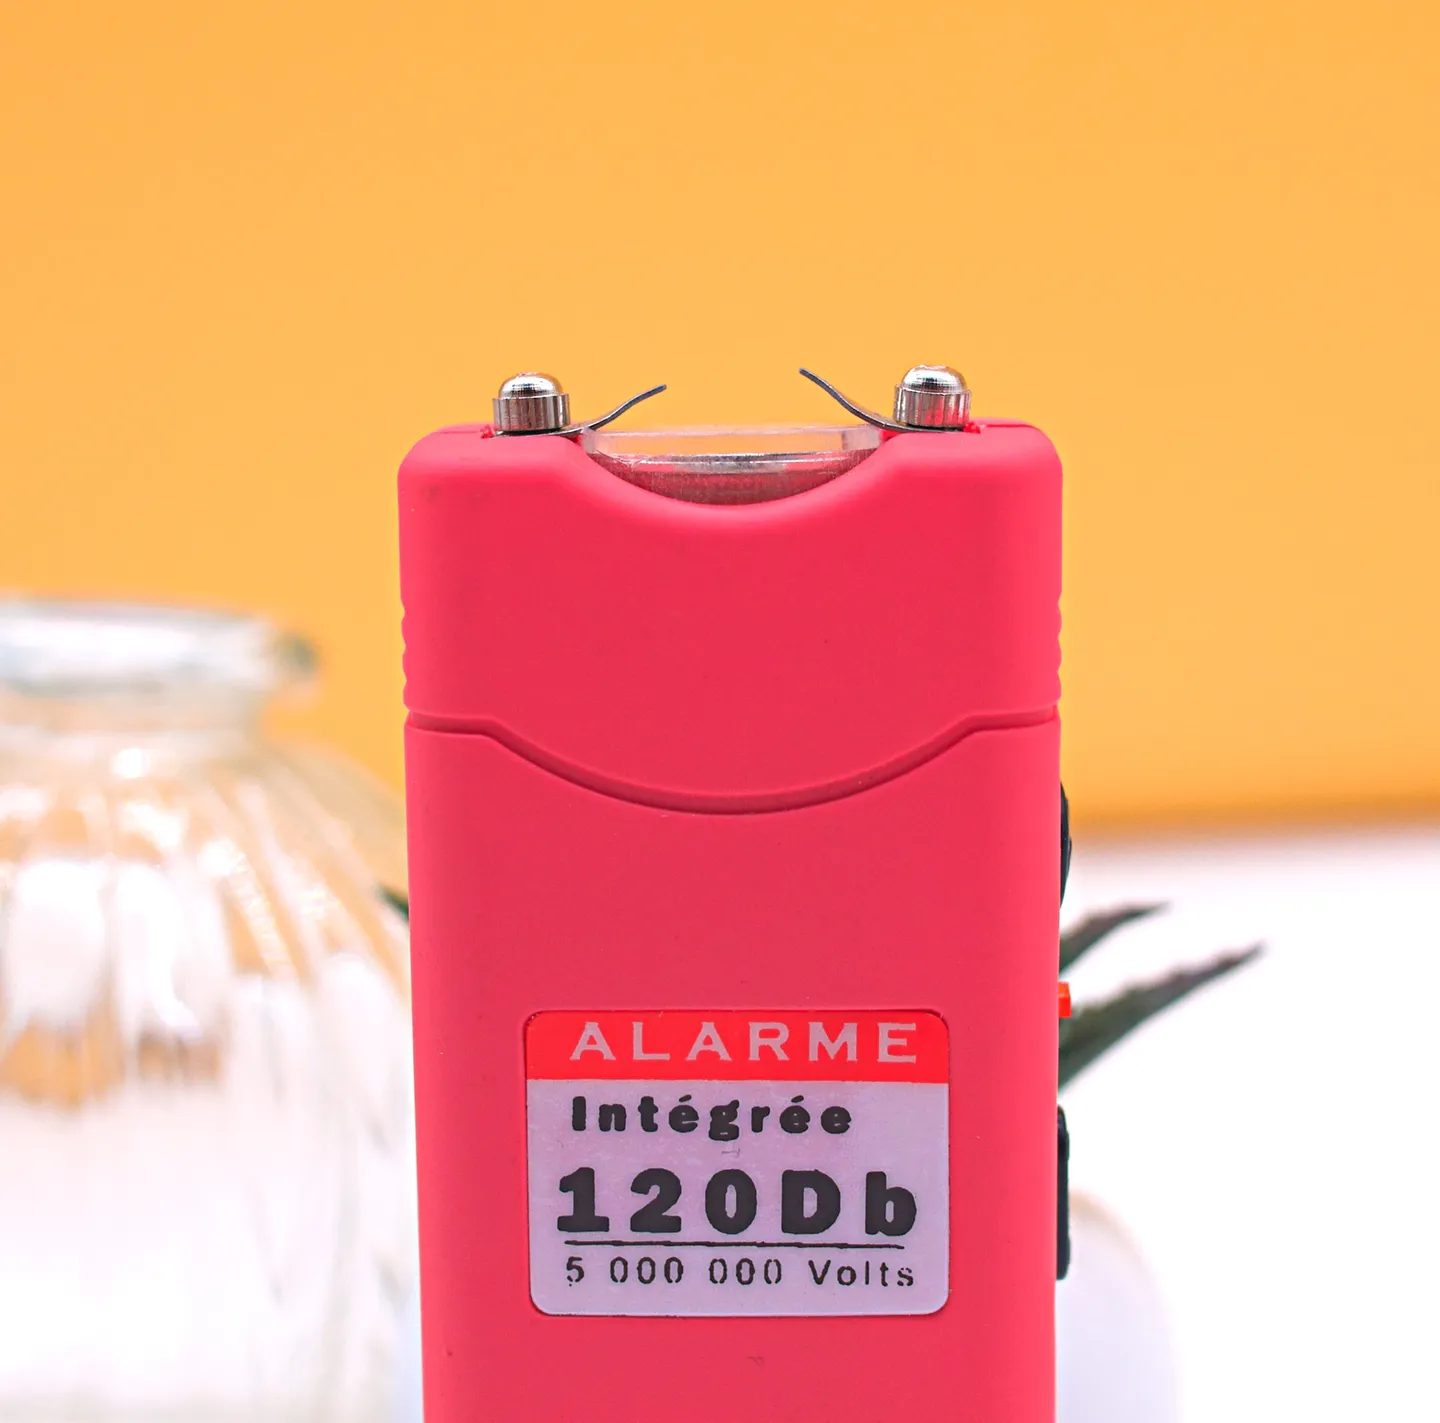 Shocker & Taser - Lo Shocker tascabile rosa con allarme integrato